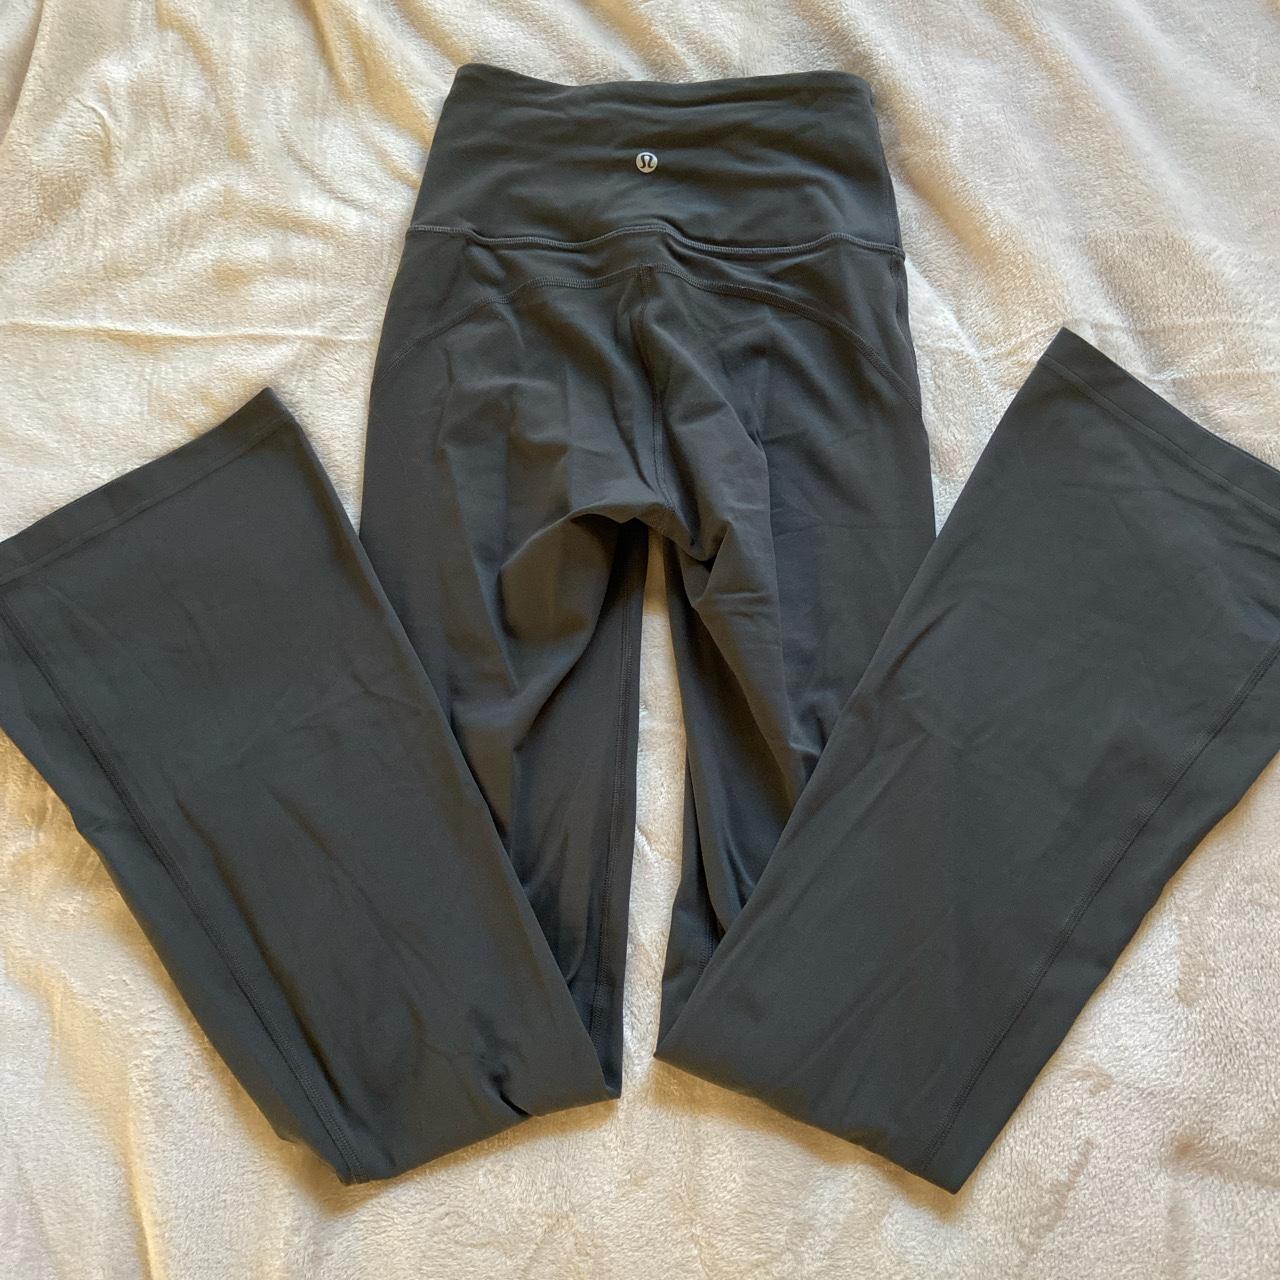 Iviva dance studio pants size 10, no holes, missing - Depop